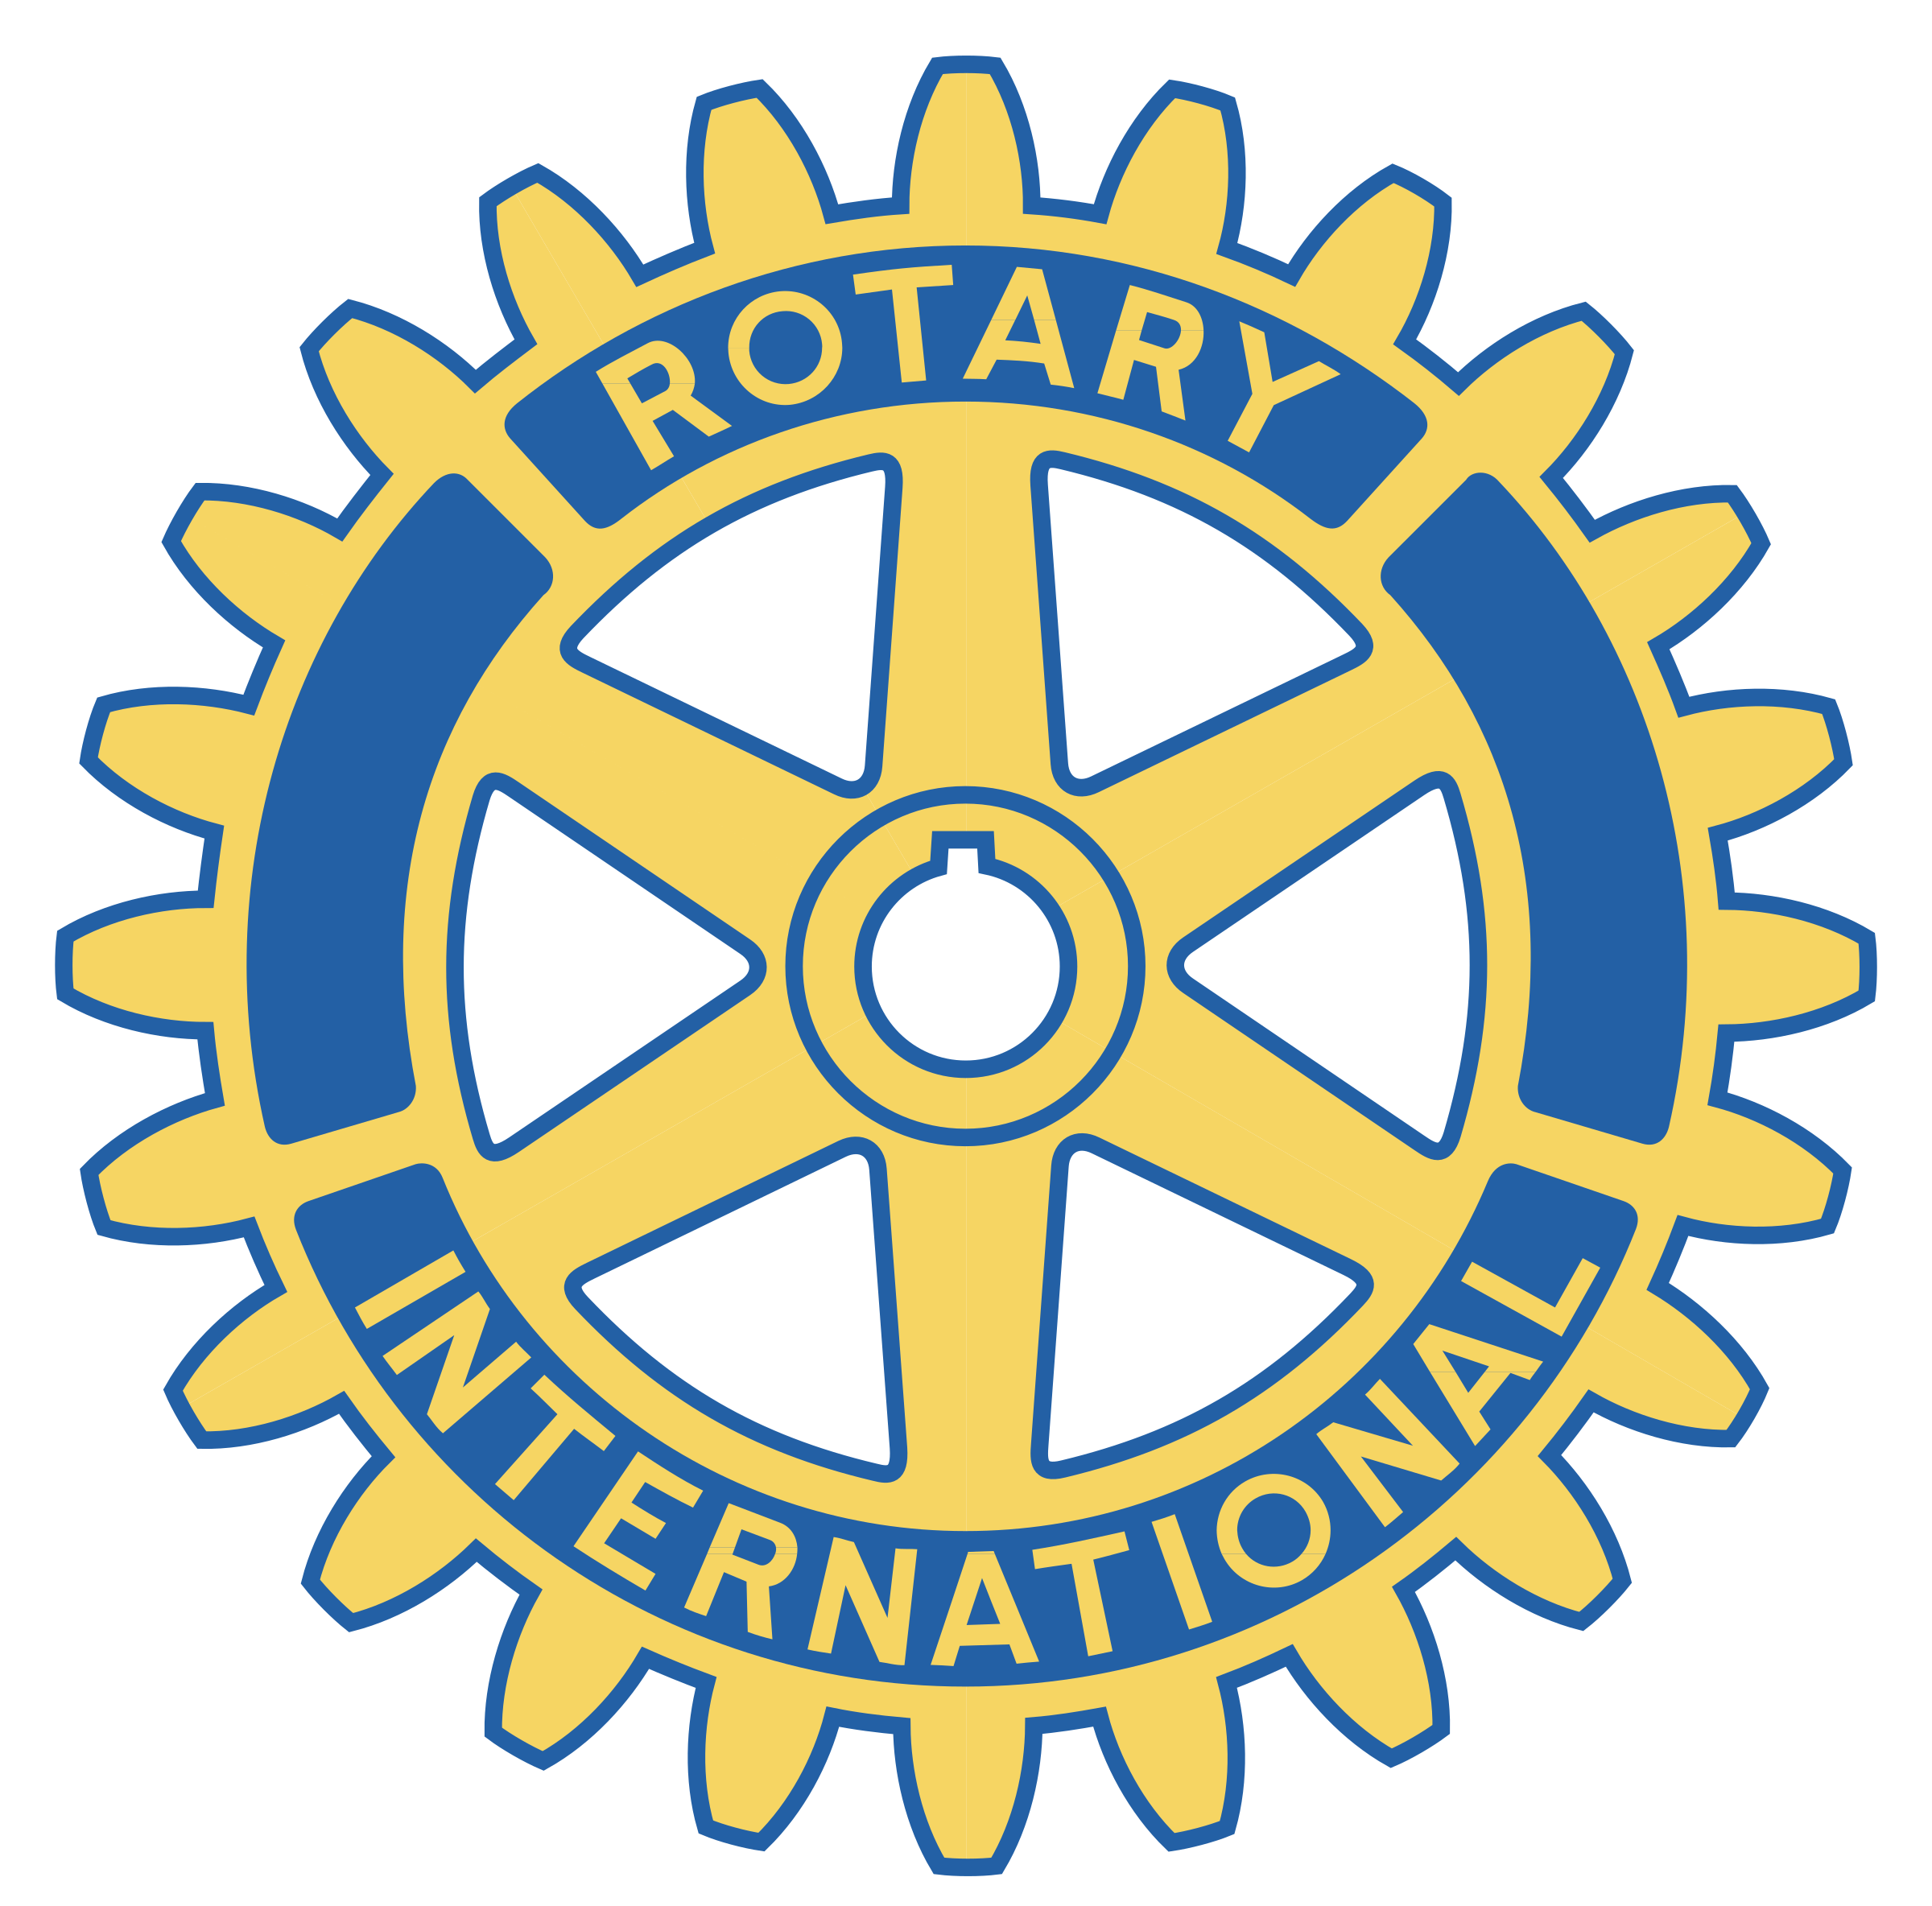 Churchill-Wilkins Rotary Club